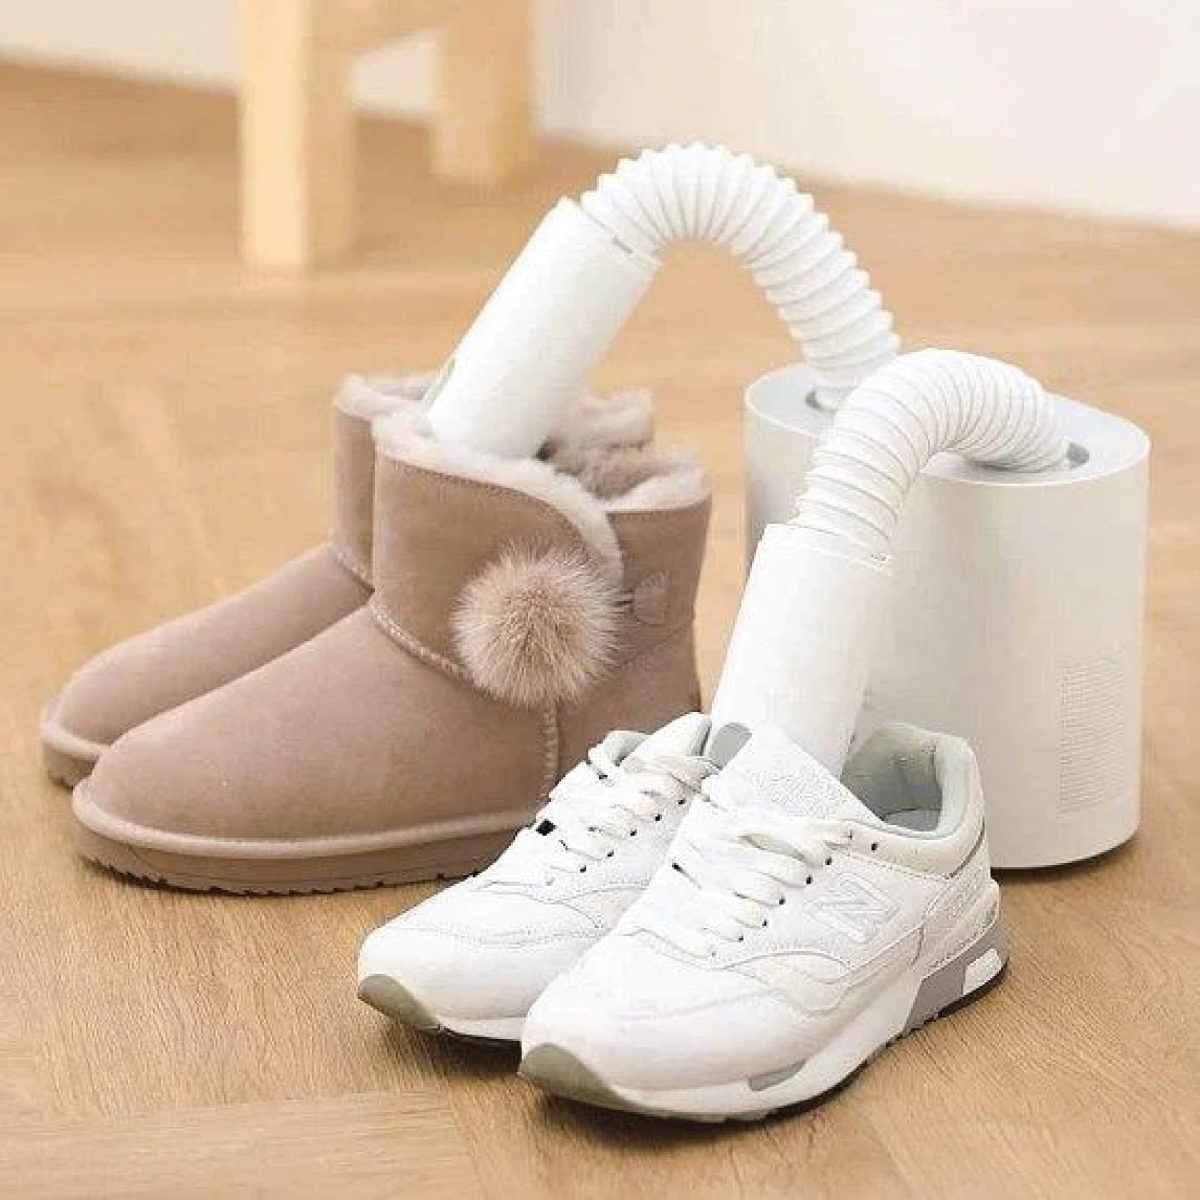 Shoes 01 Https://Youtu.be/Mkdghi0Kicg مجفف الاحذية من ديرما Hx20 (مزيل الروائح الاوزون) - هيلثي هوم